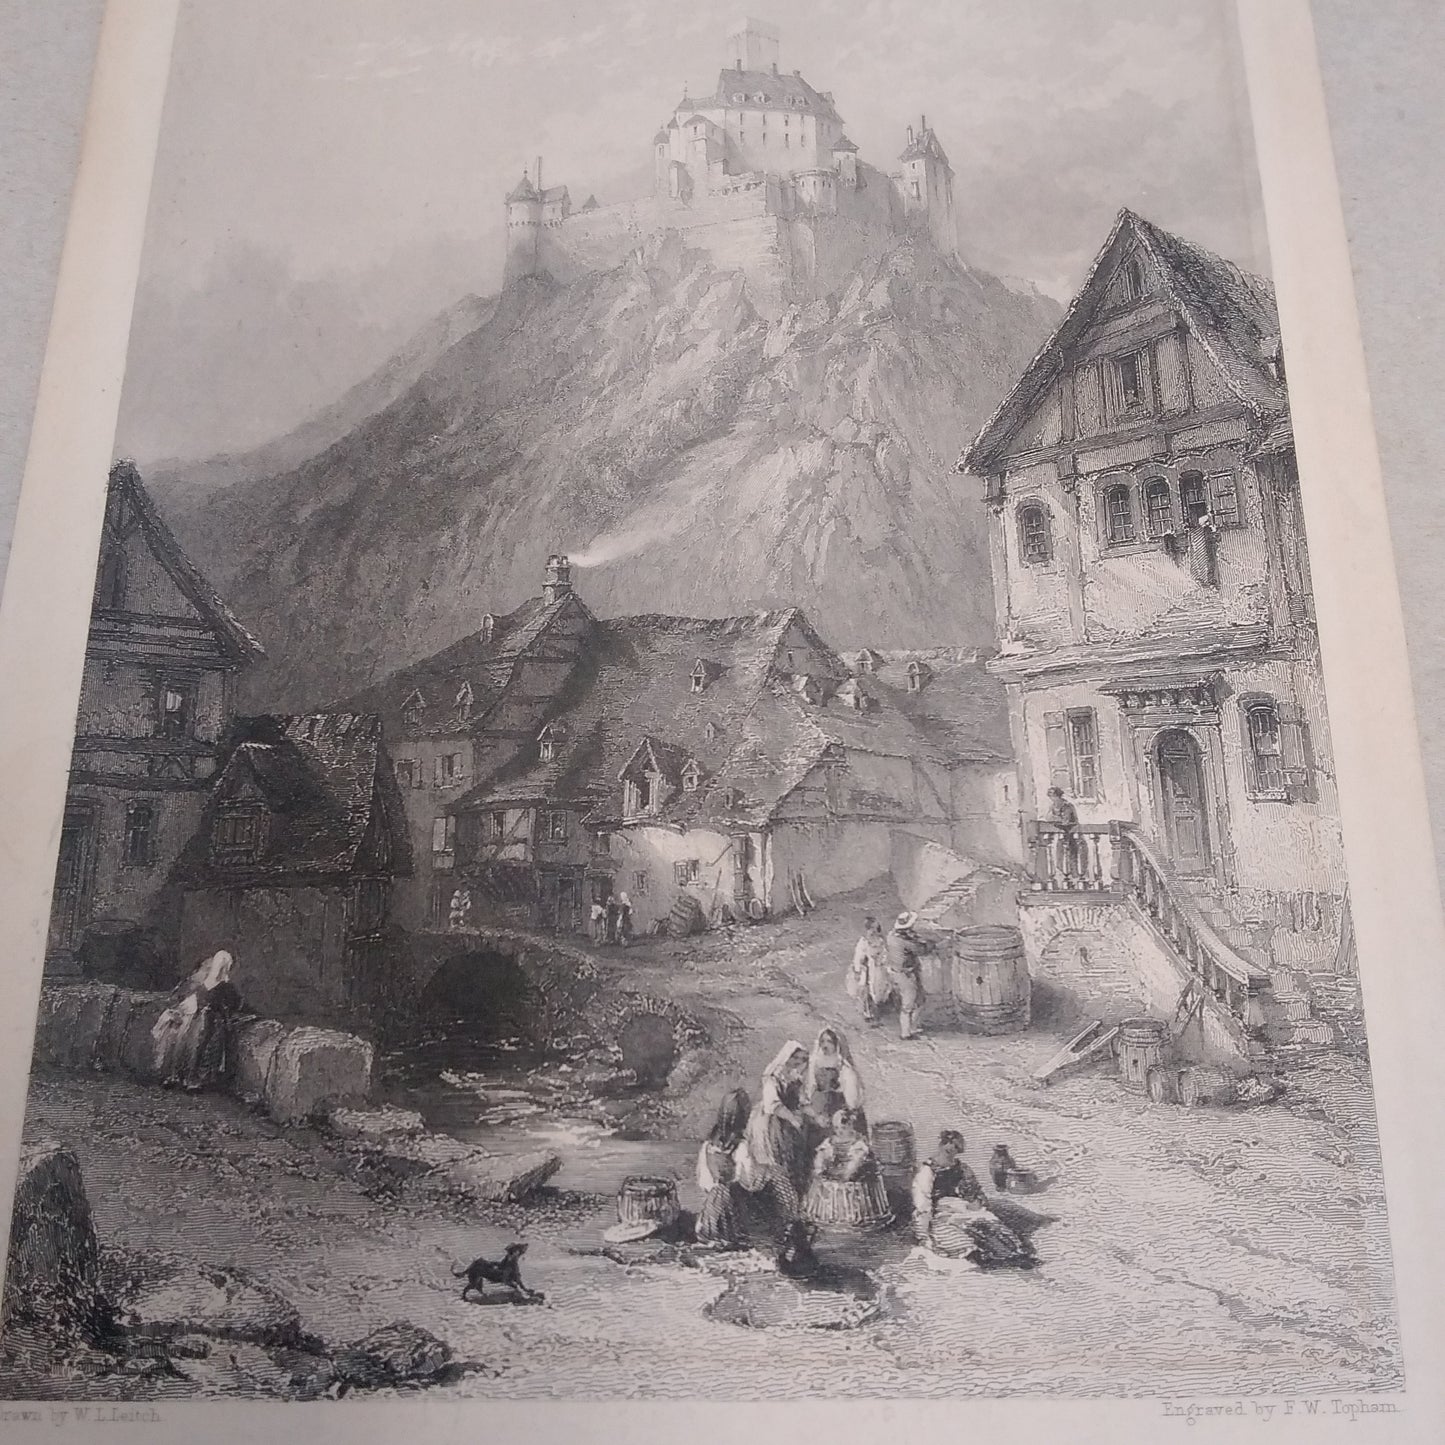 Vintage - Germany "Braubach on the Rhine" 1865 Art Print Engraving